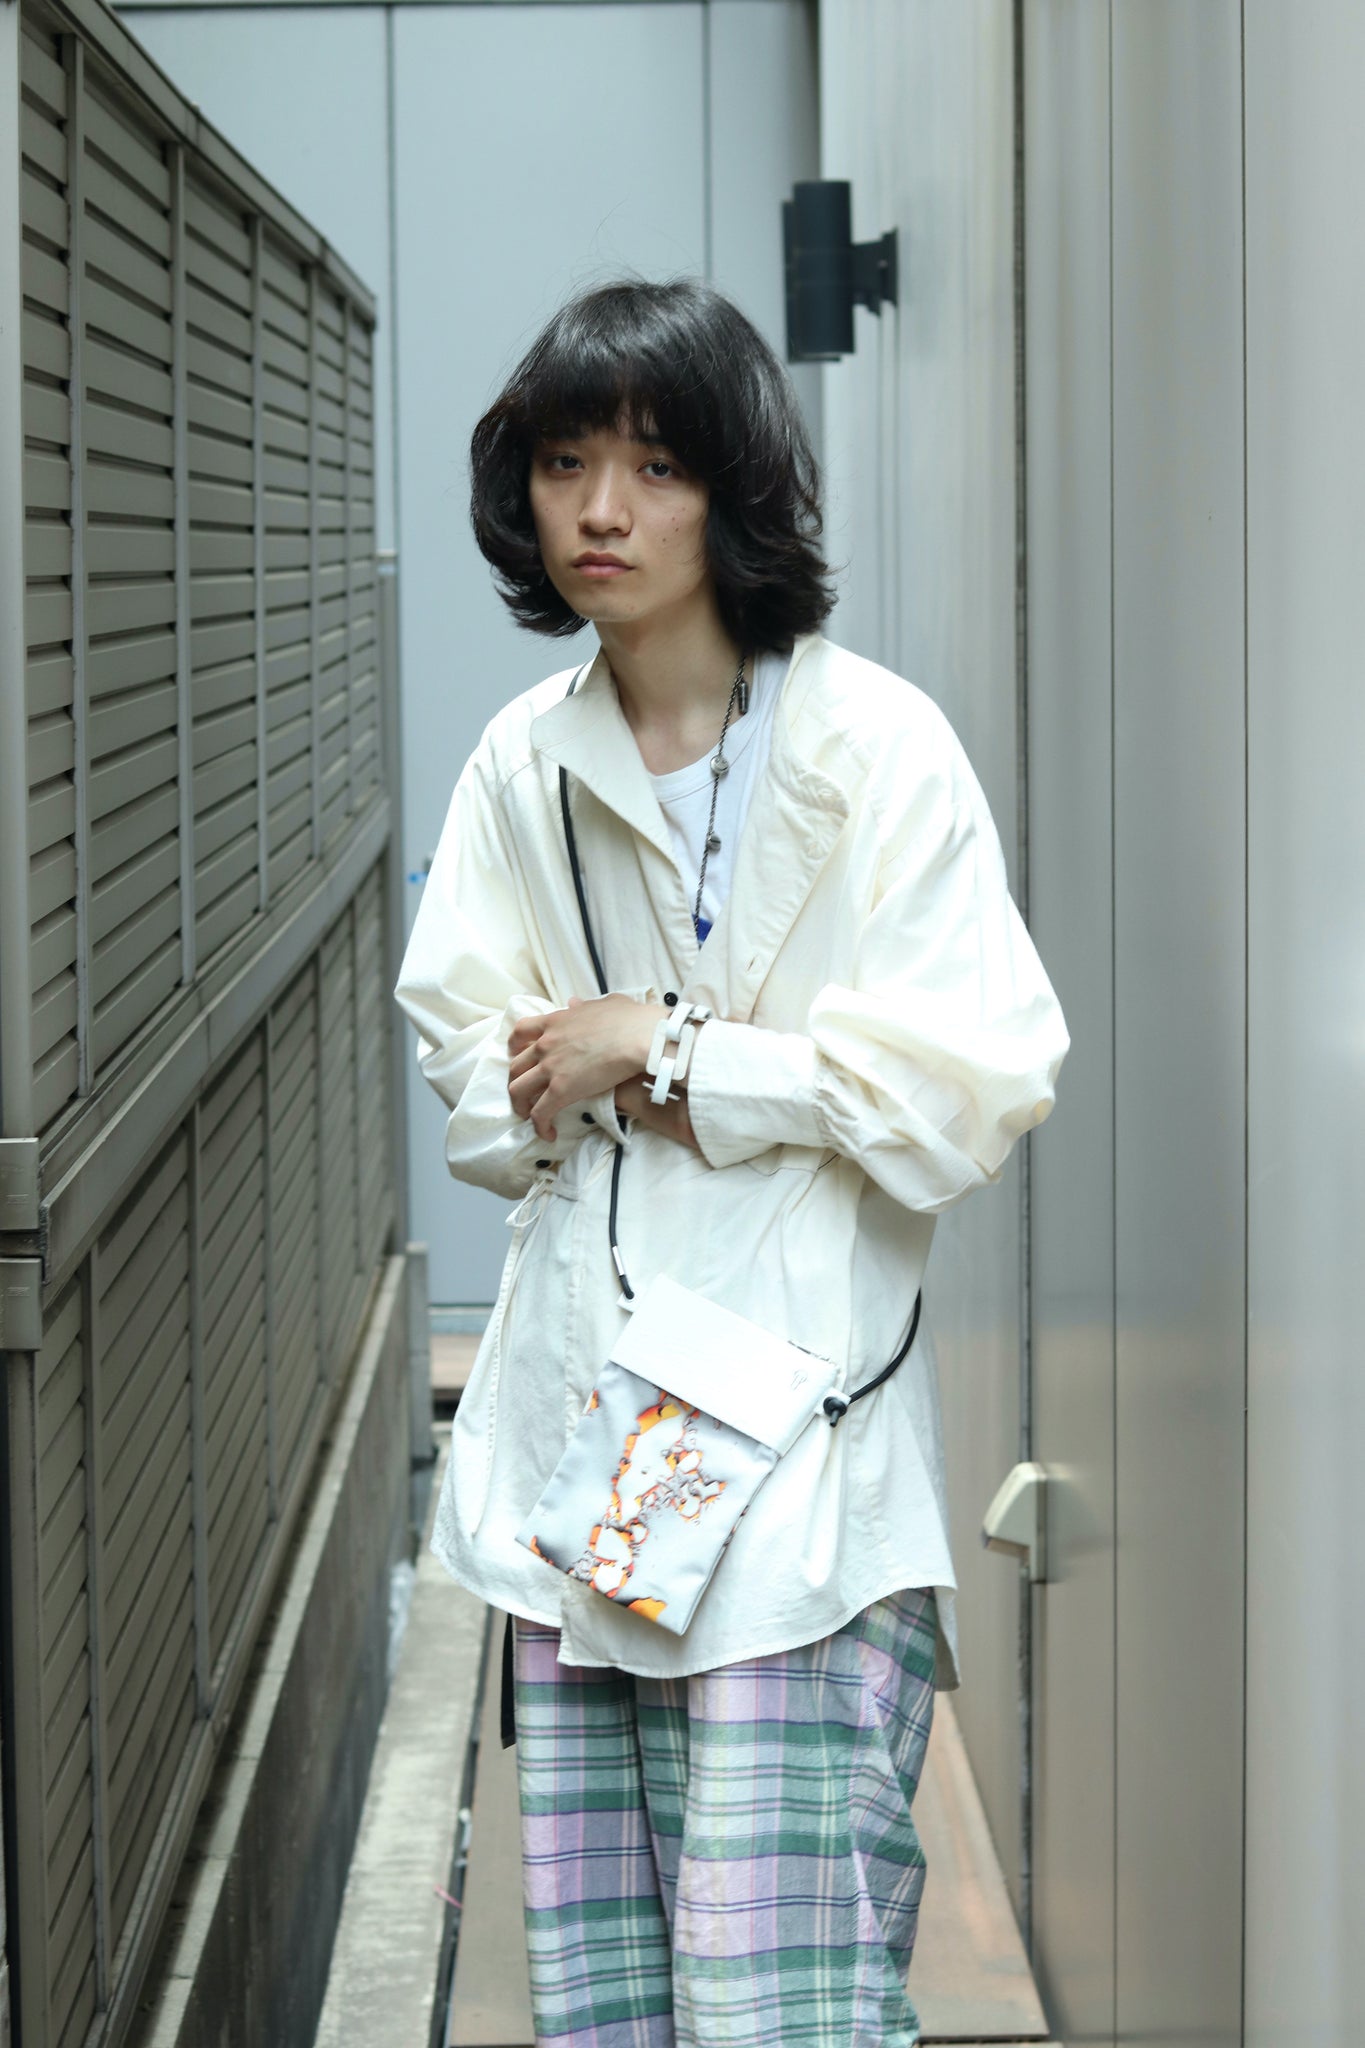 KAGARI YUSUKE COLLECTION DE 21SS TISSULES MURAL SAKOSOSHISH MATSUMOTO Image